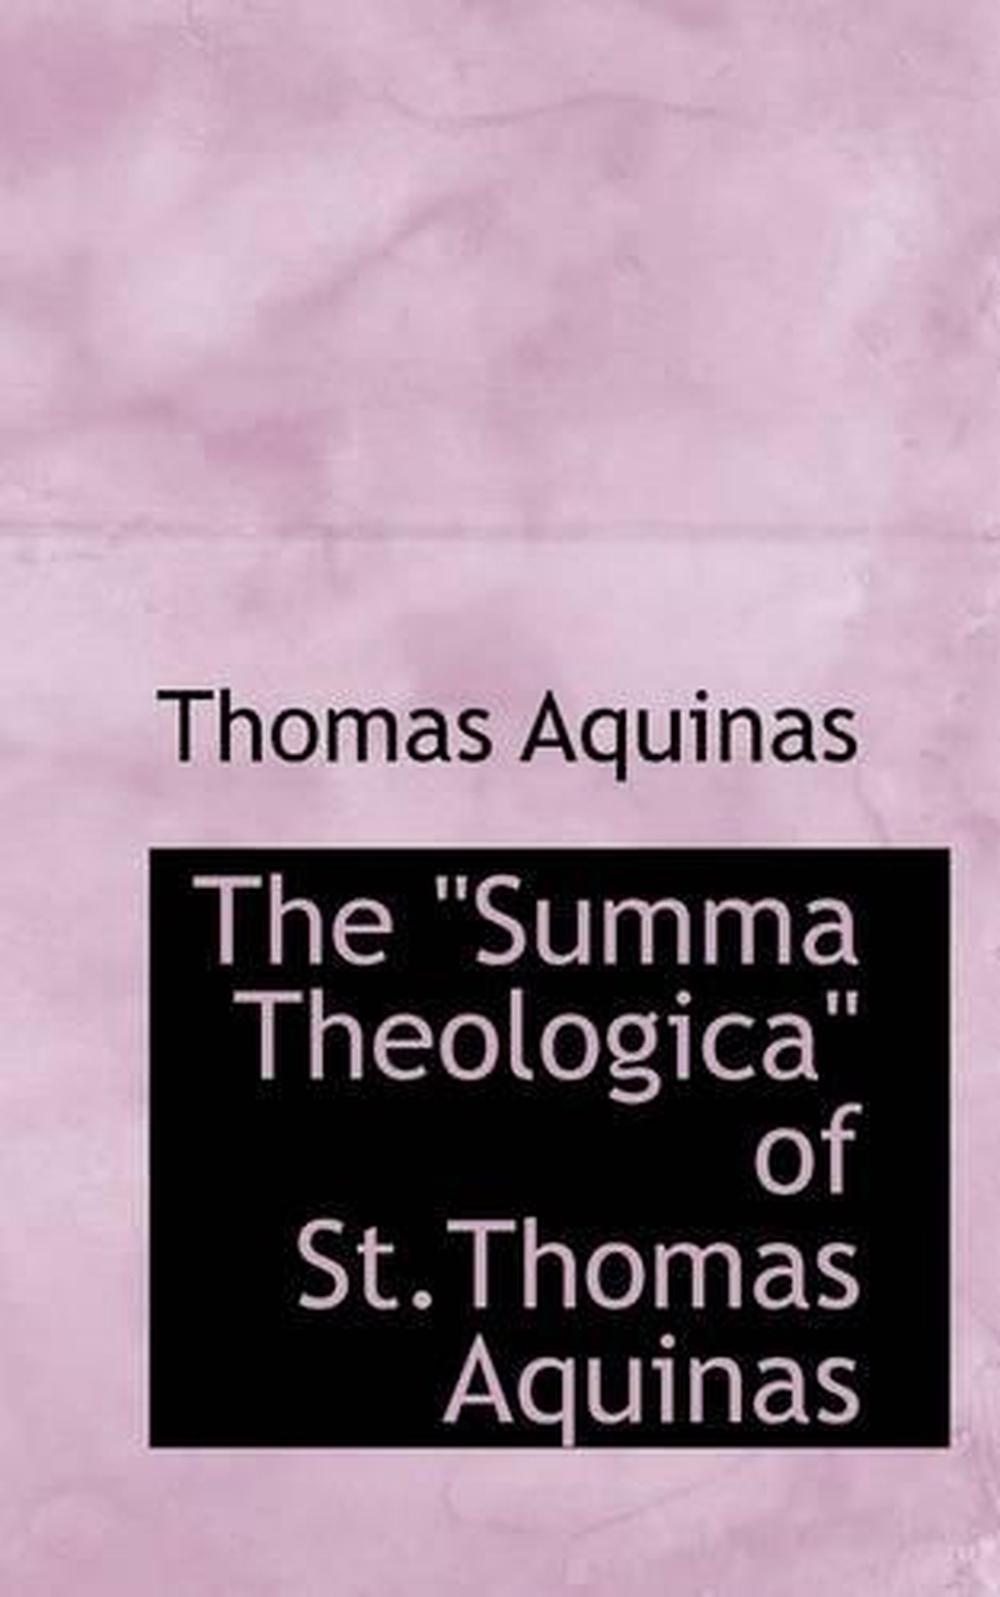 aquinas summa theologica